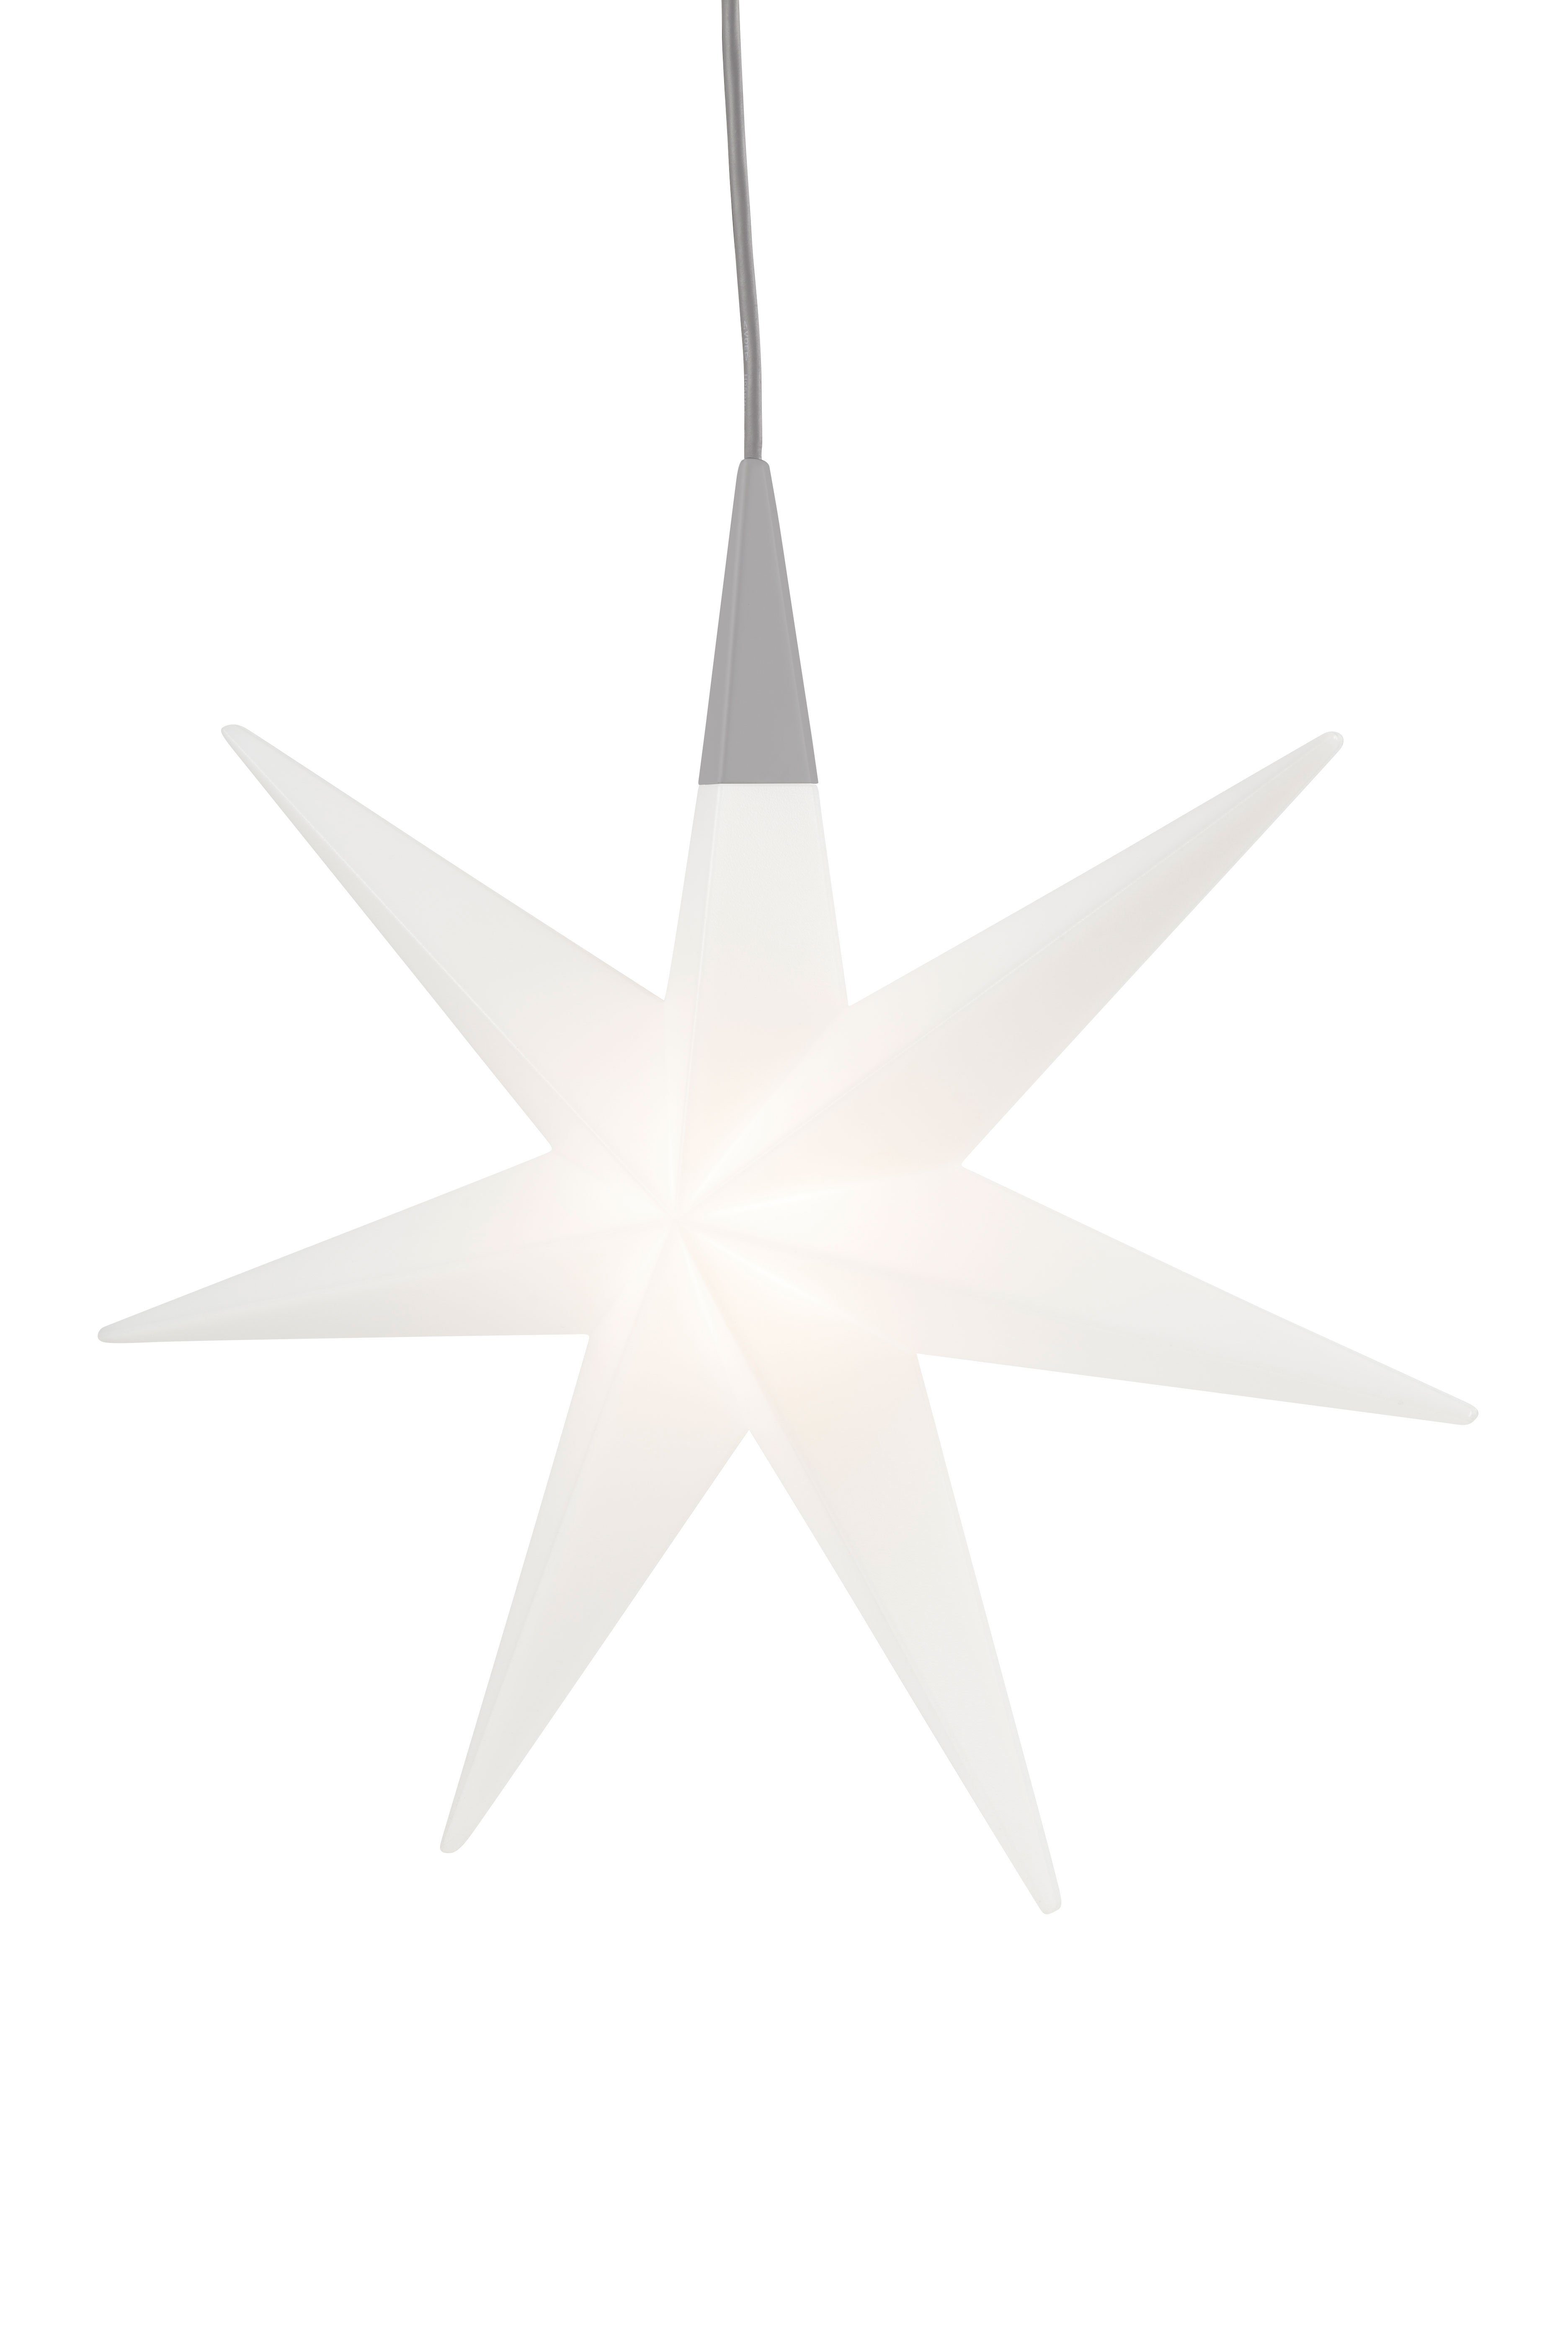 8 seasons Outdoor Warmweiß, weiß integriert, design LED Star, LED In- cm Shining Stern für Glory fest 55 und